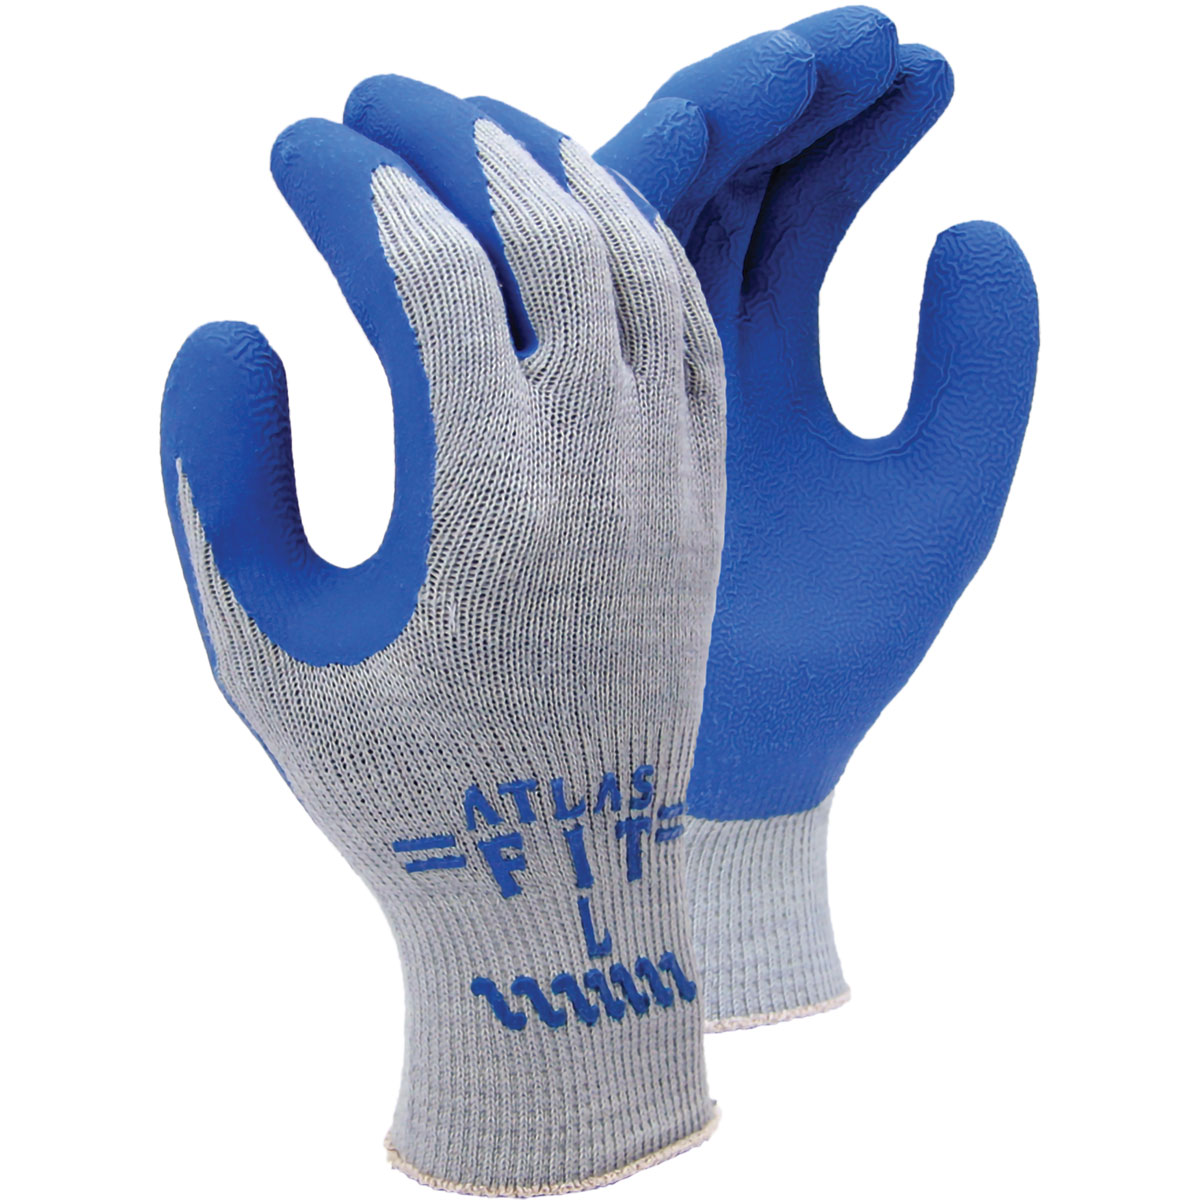 Showa Atlas Latex Palm Gloves